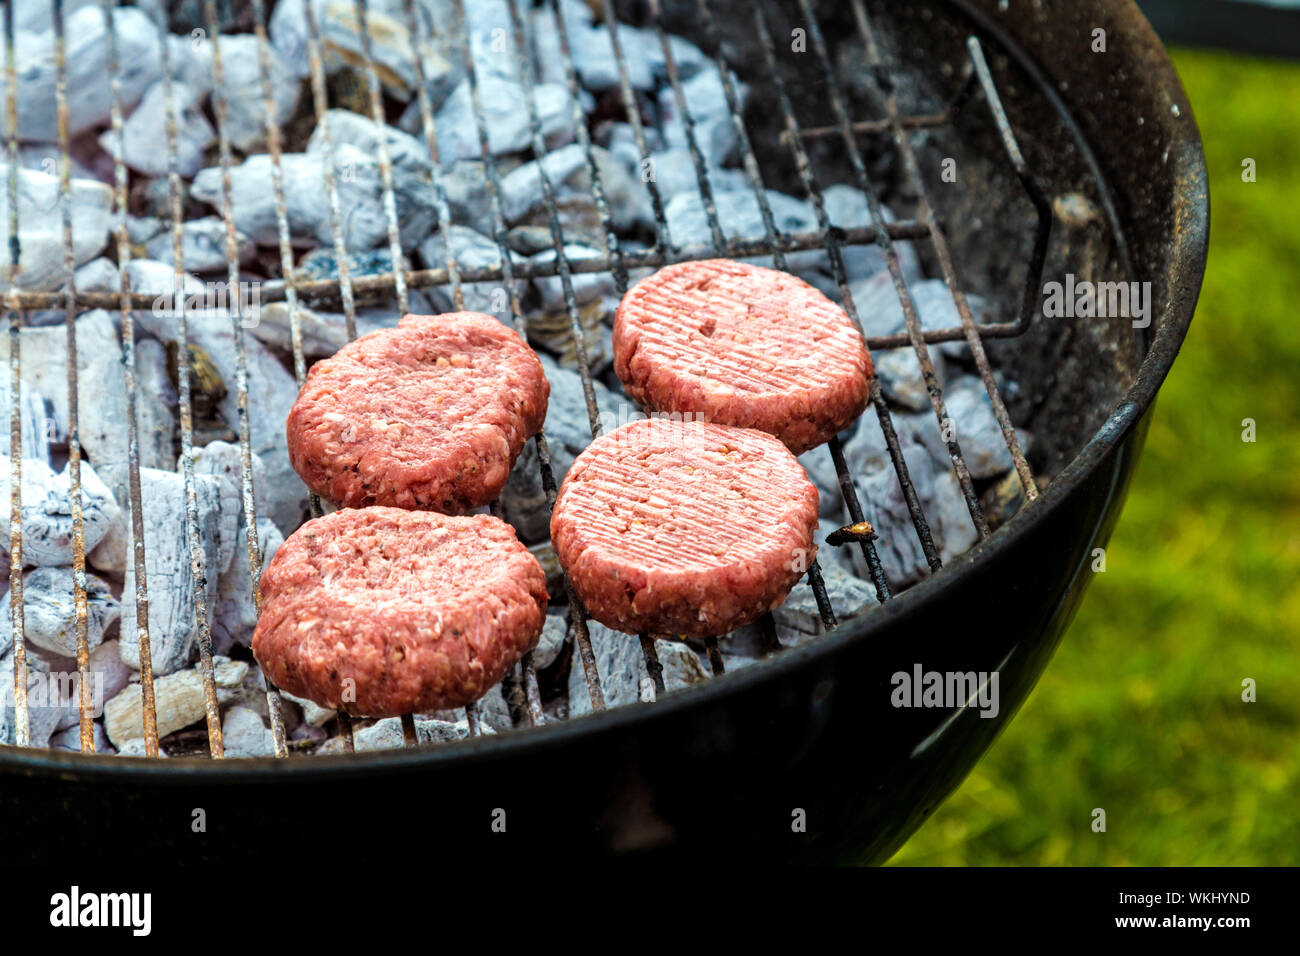 Raw hamburger patties on the grill Stock Photo - Alamy